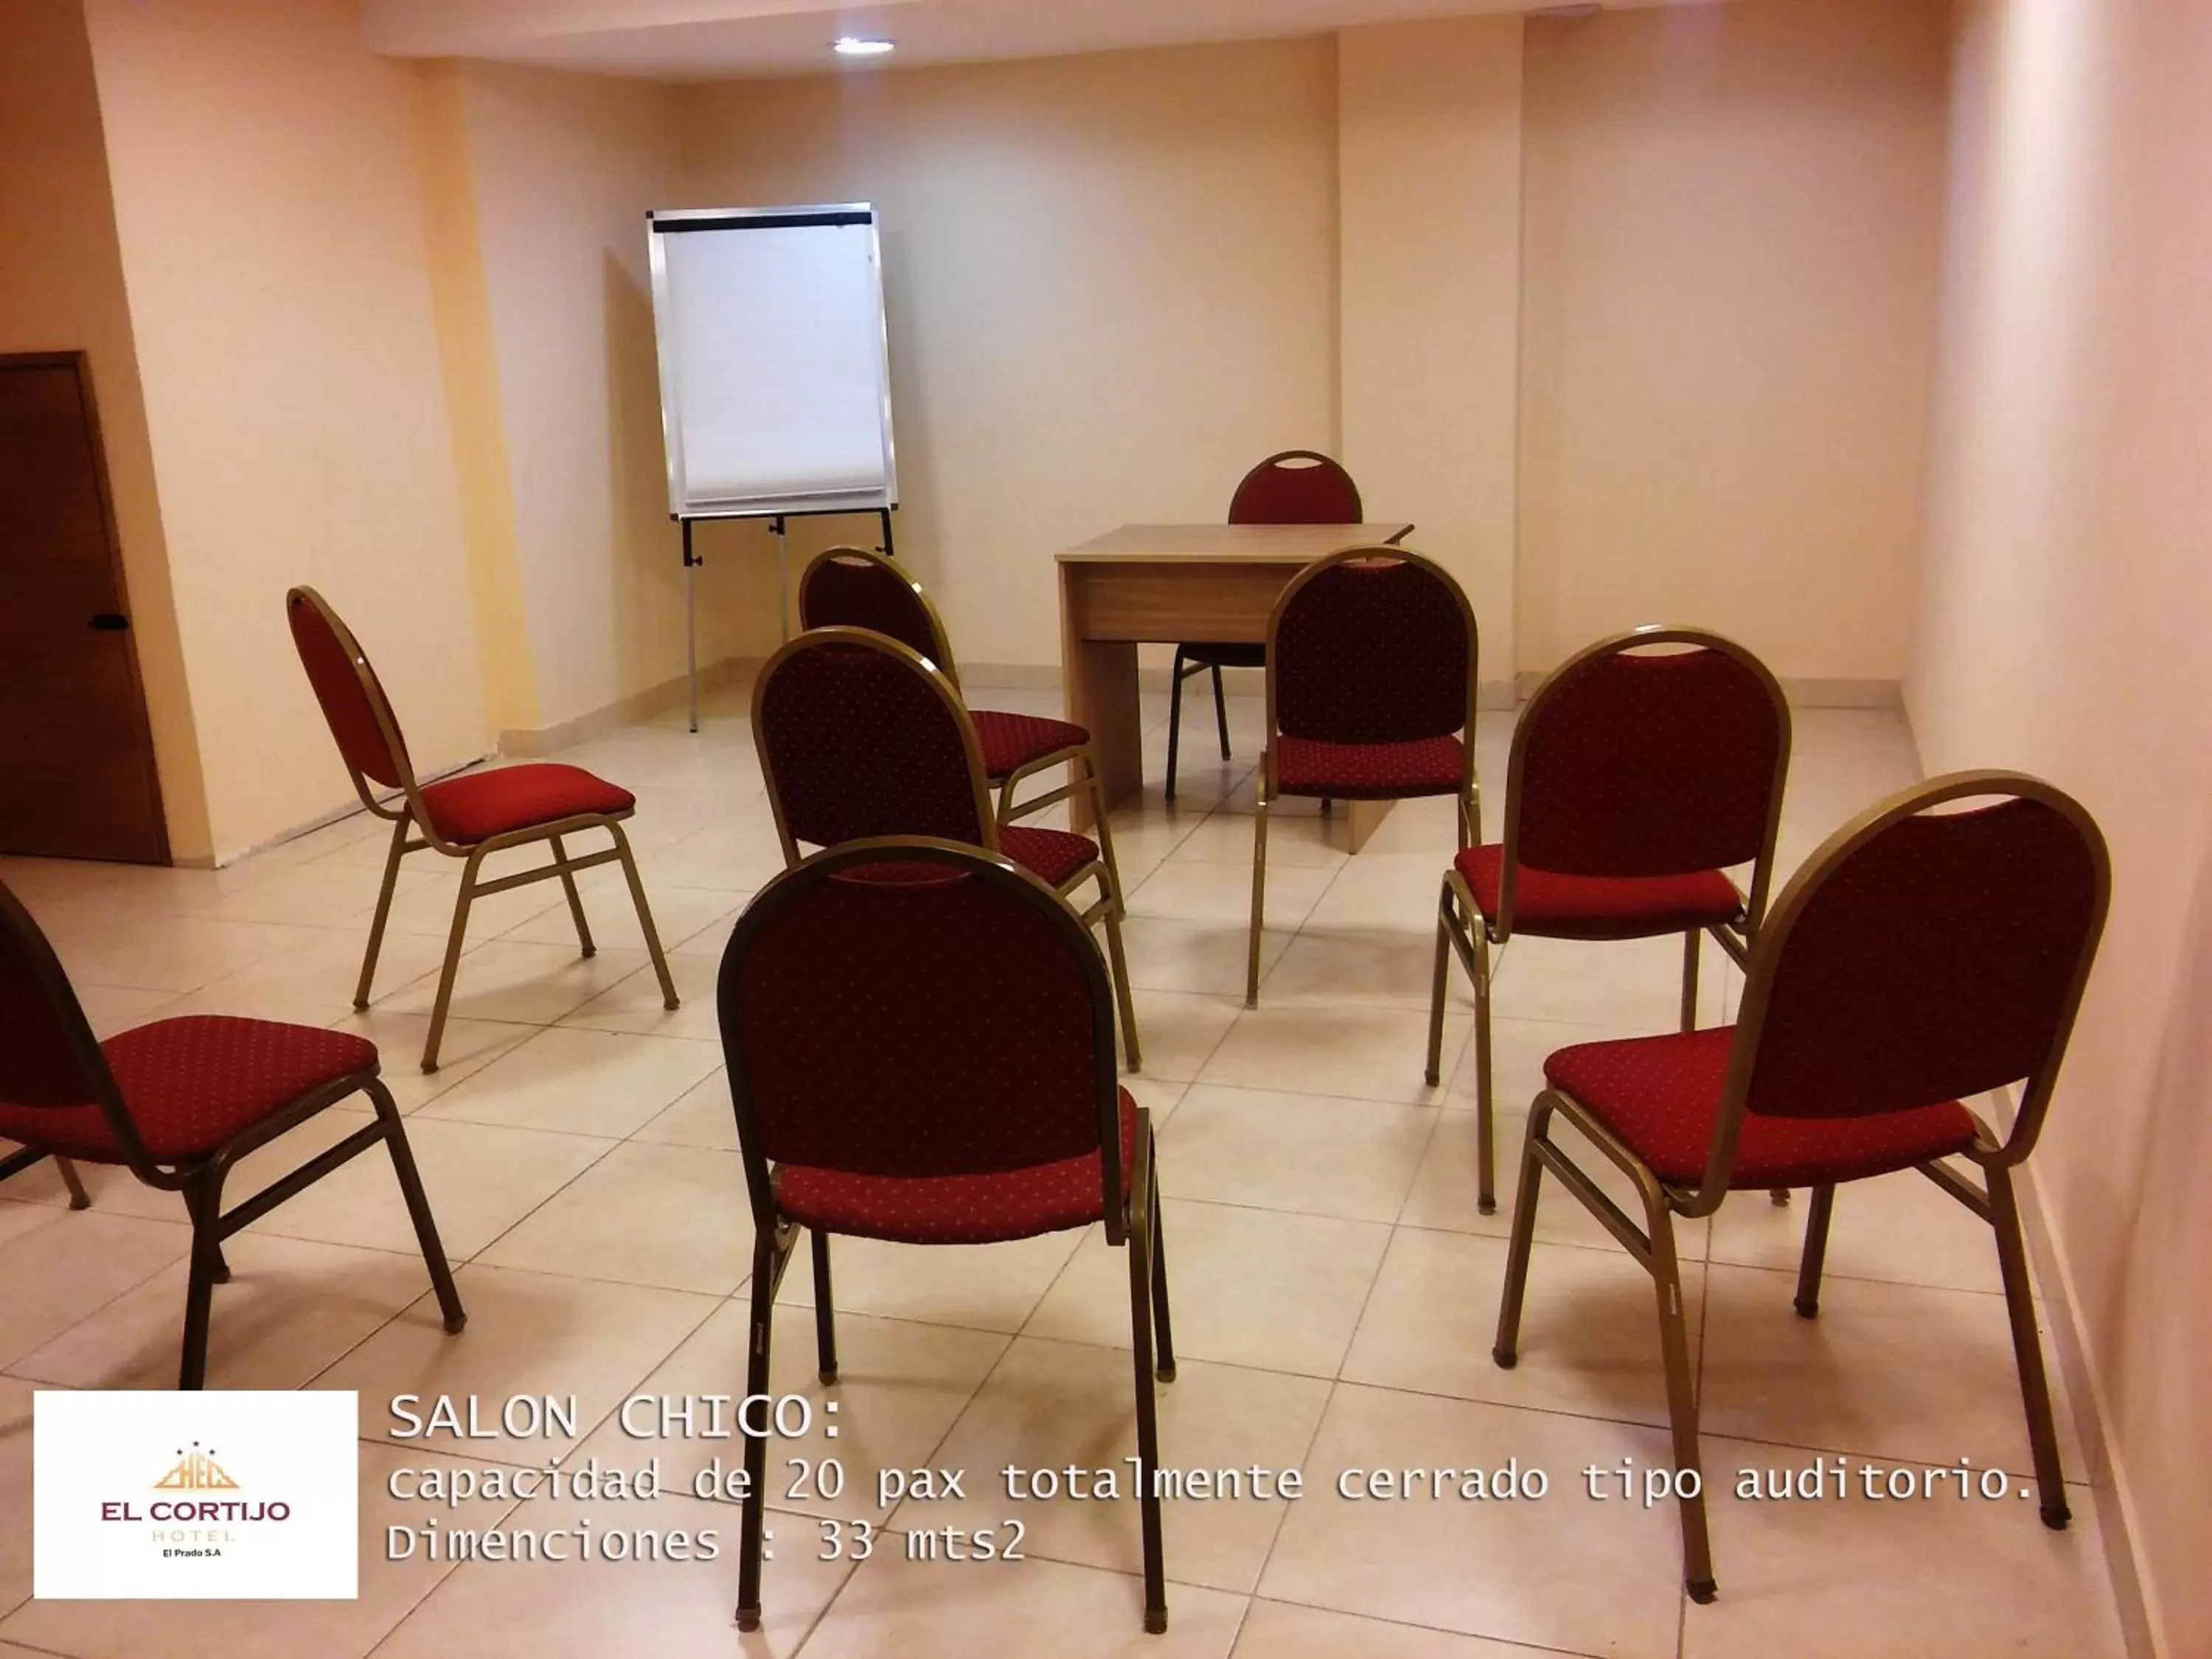 Decorative detail, Business Area/Conference Room in Hotel El Cortijo